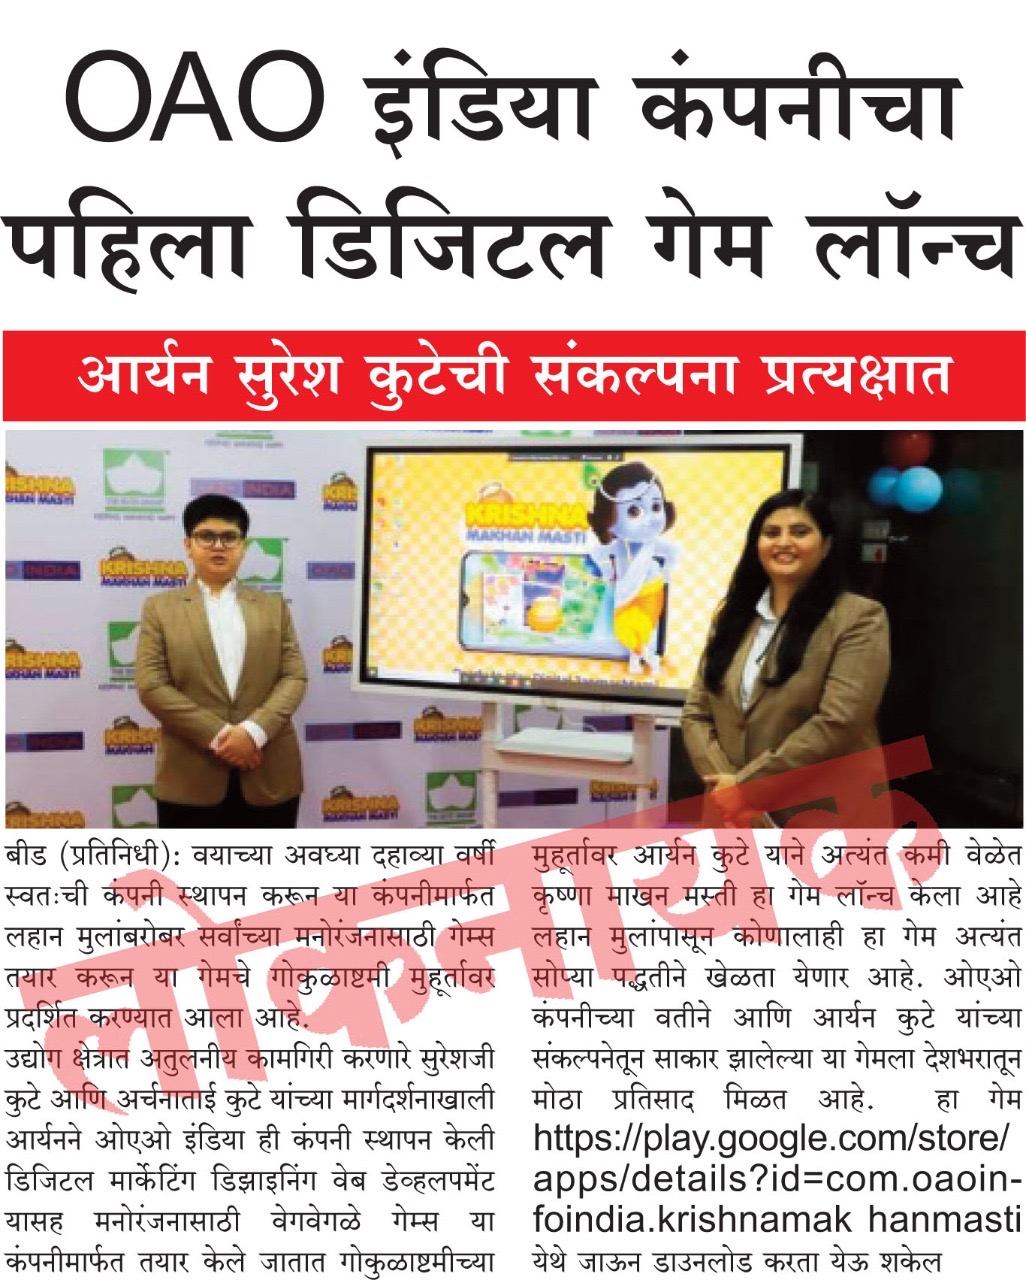 Krishna Makhan Masti game launched by OAO INDIA - Daily Loknayak